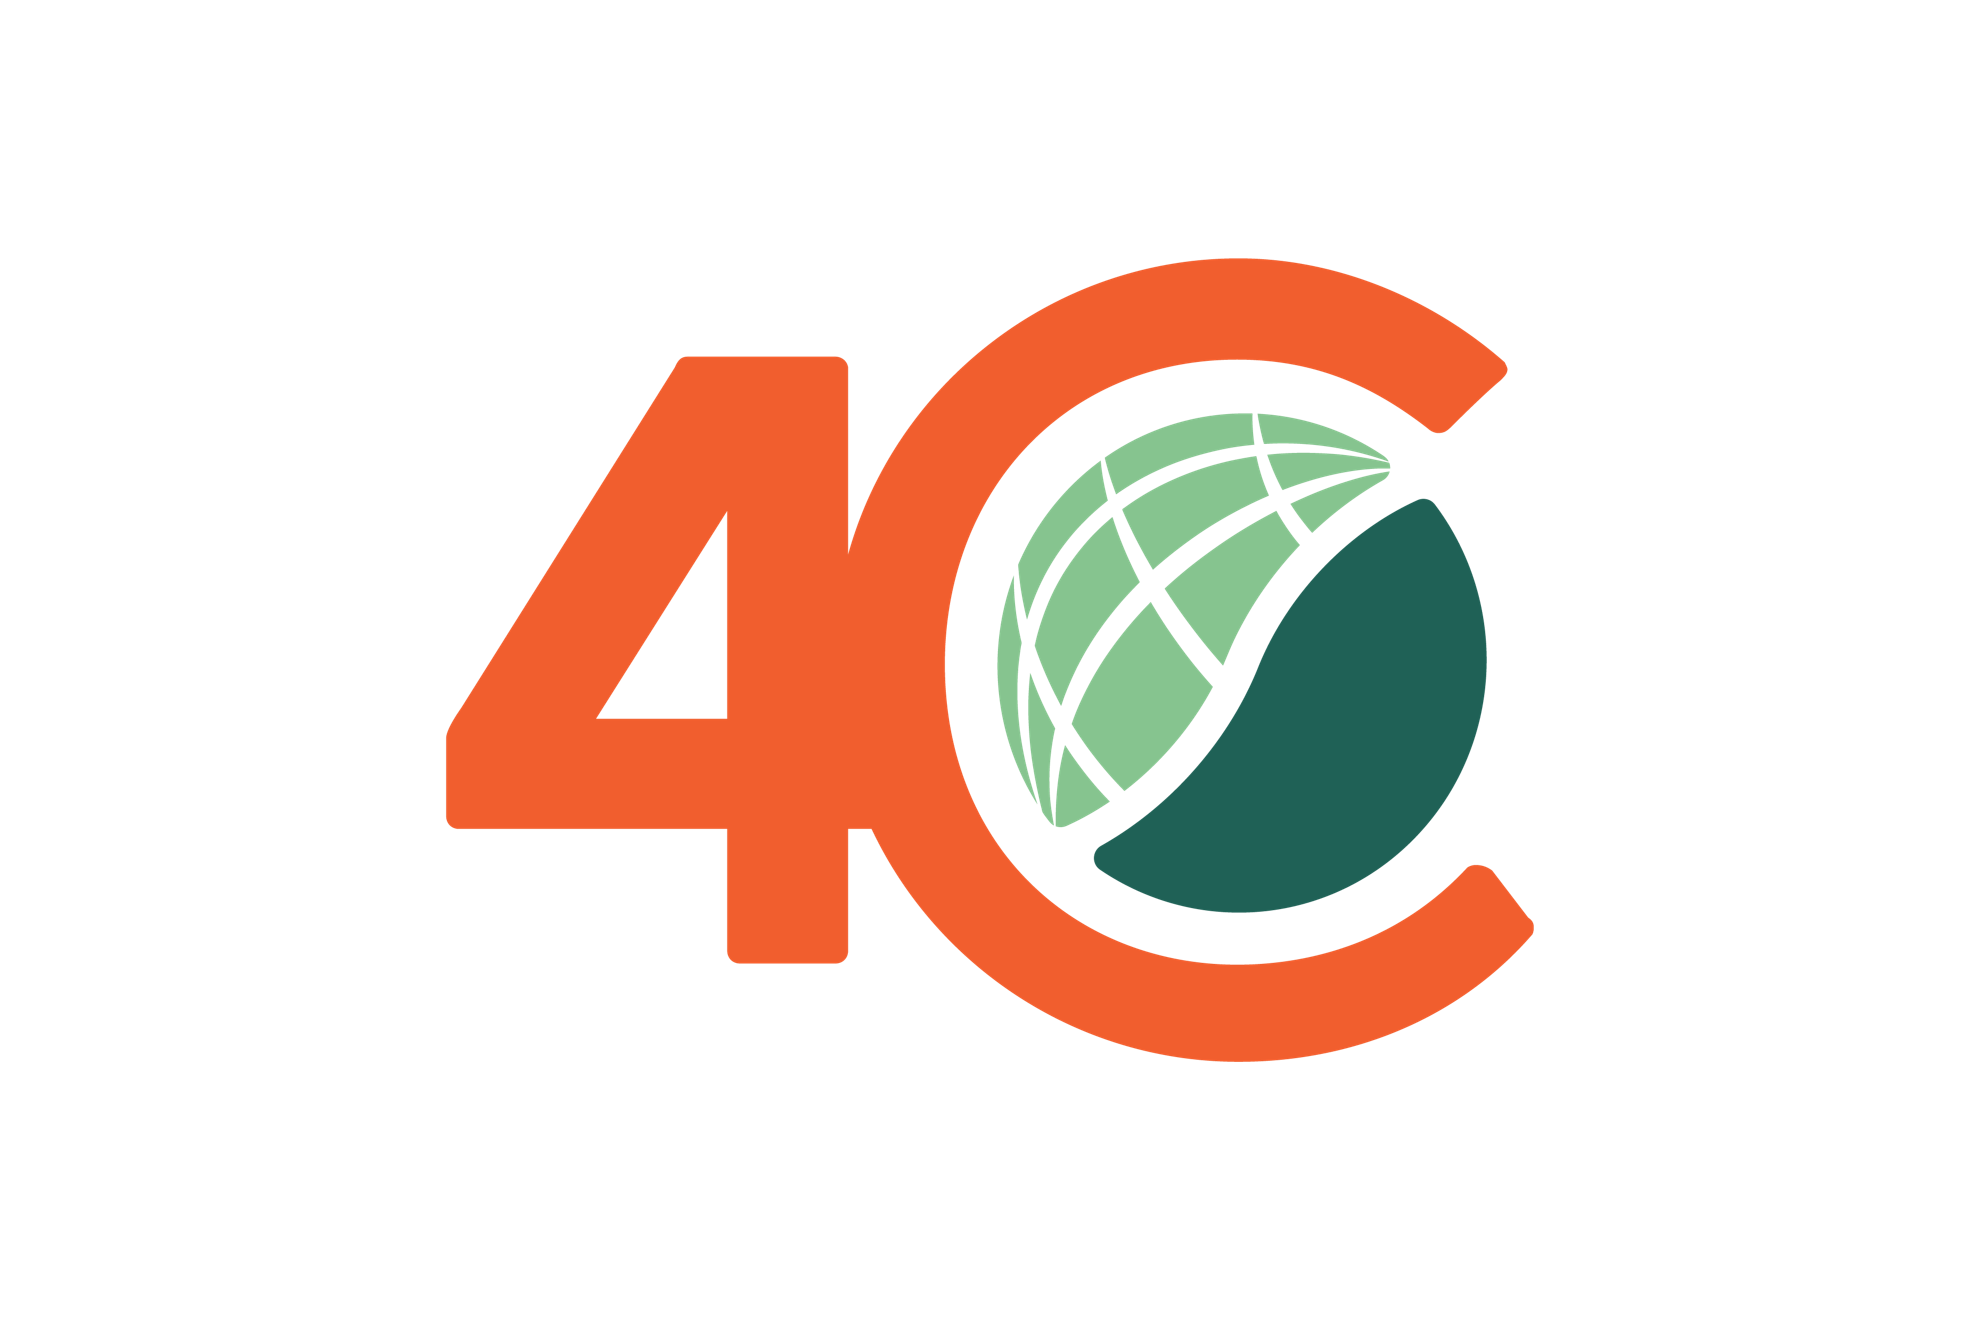 4C Services GmbH logo